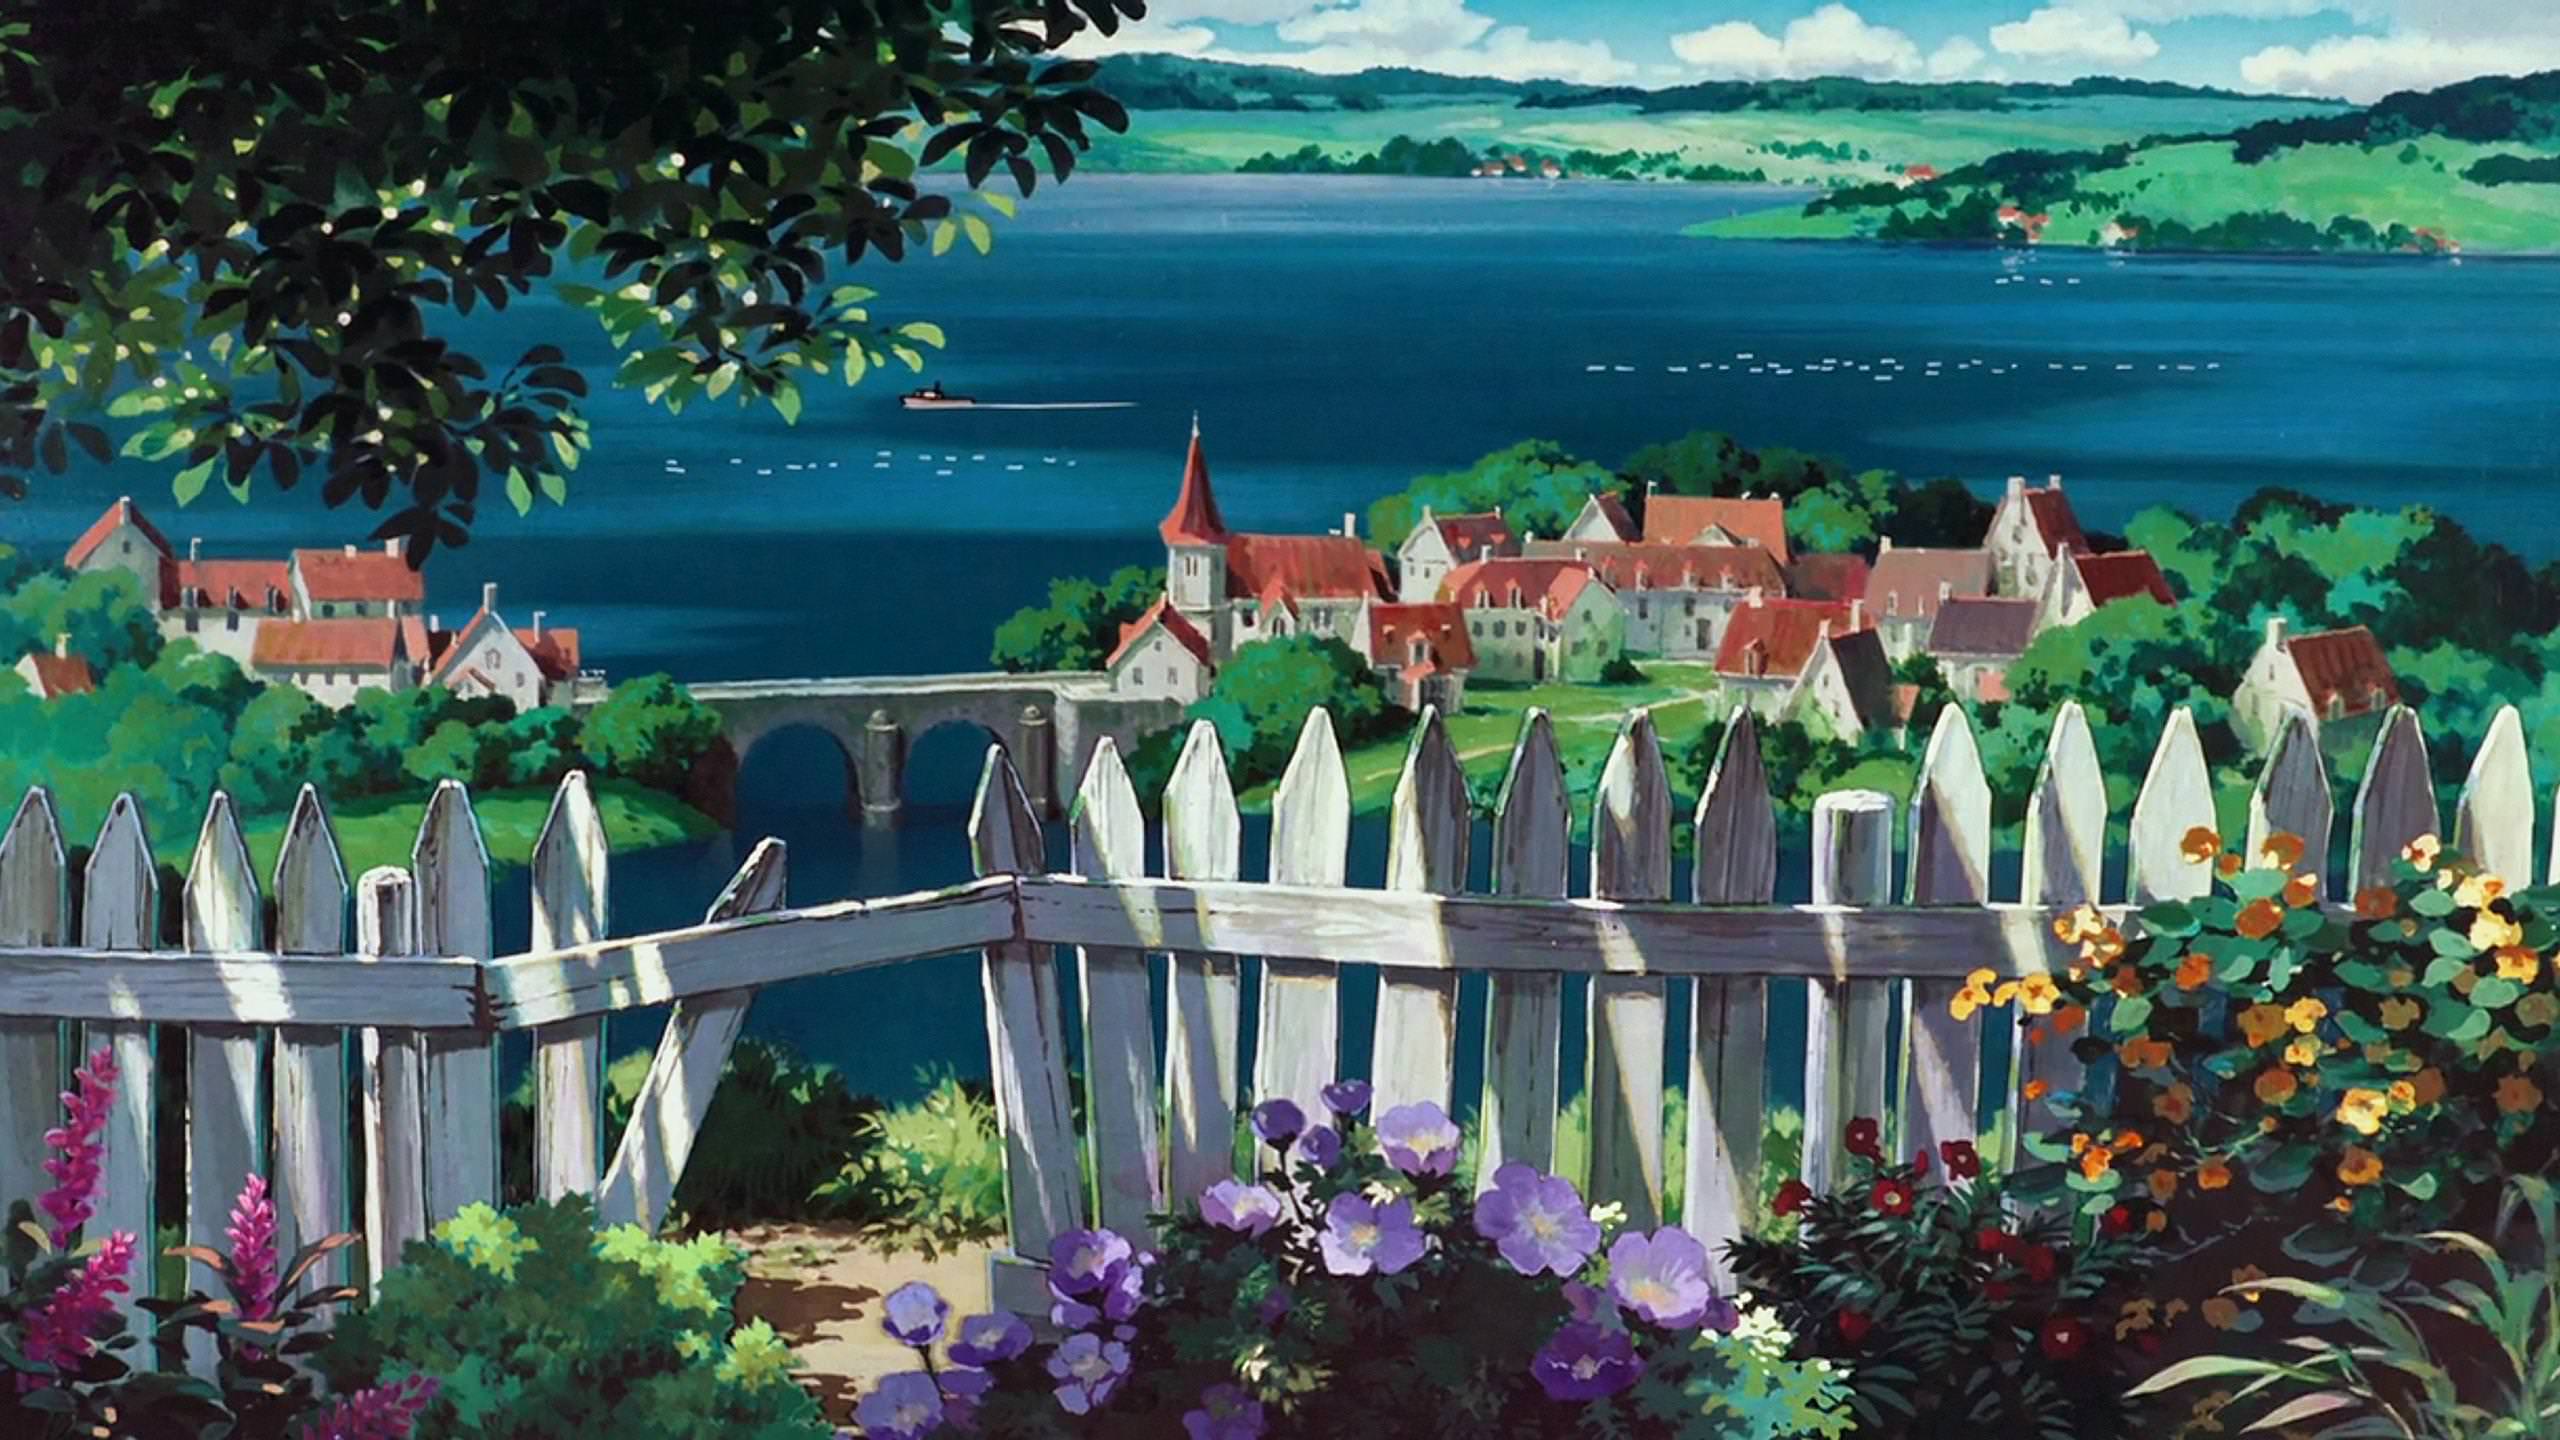 Anime 2560x1440 anime Studio Ghibli Kiki's Delivery Service upscaled